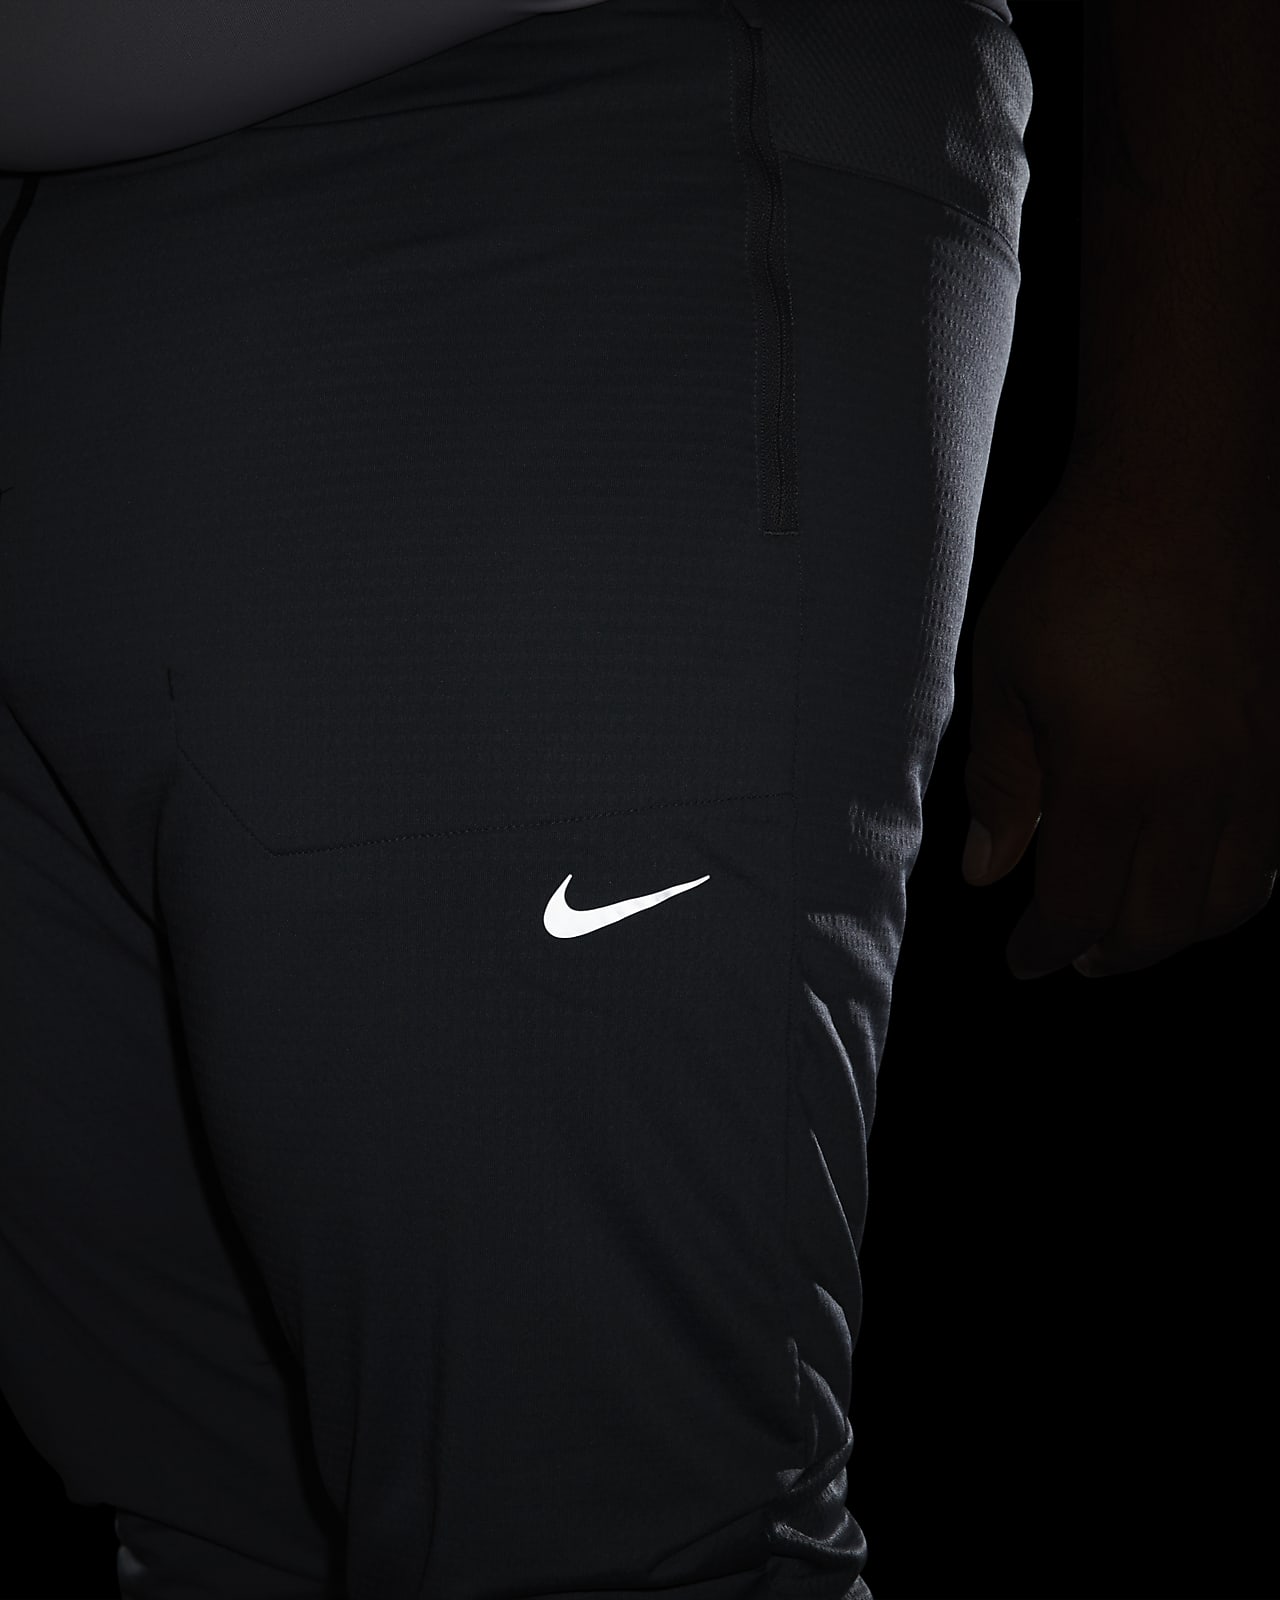  Nike Men's Team Miler Lightweight Running Pants, Navy